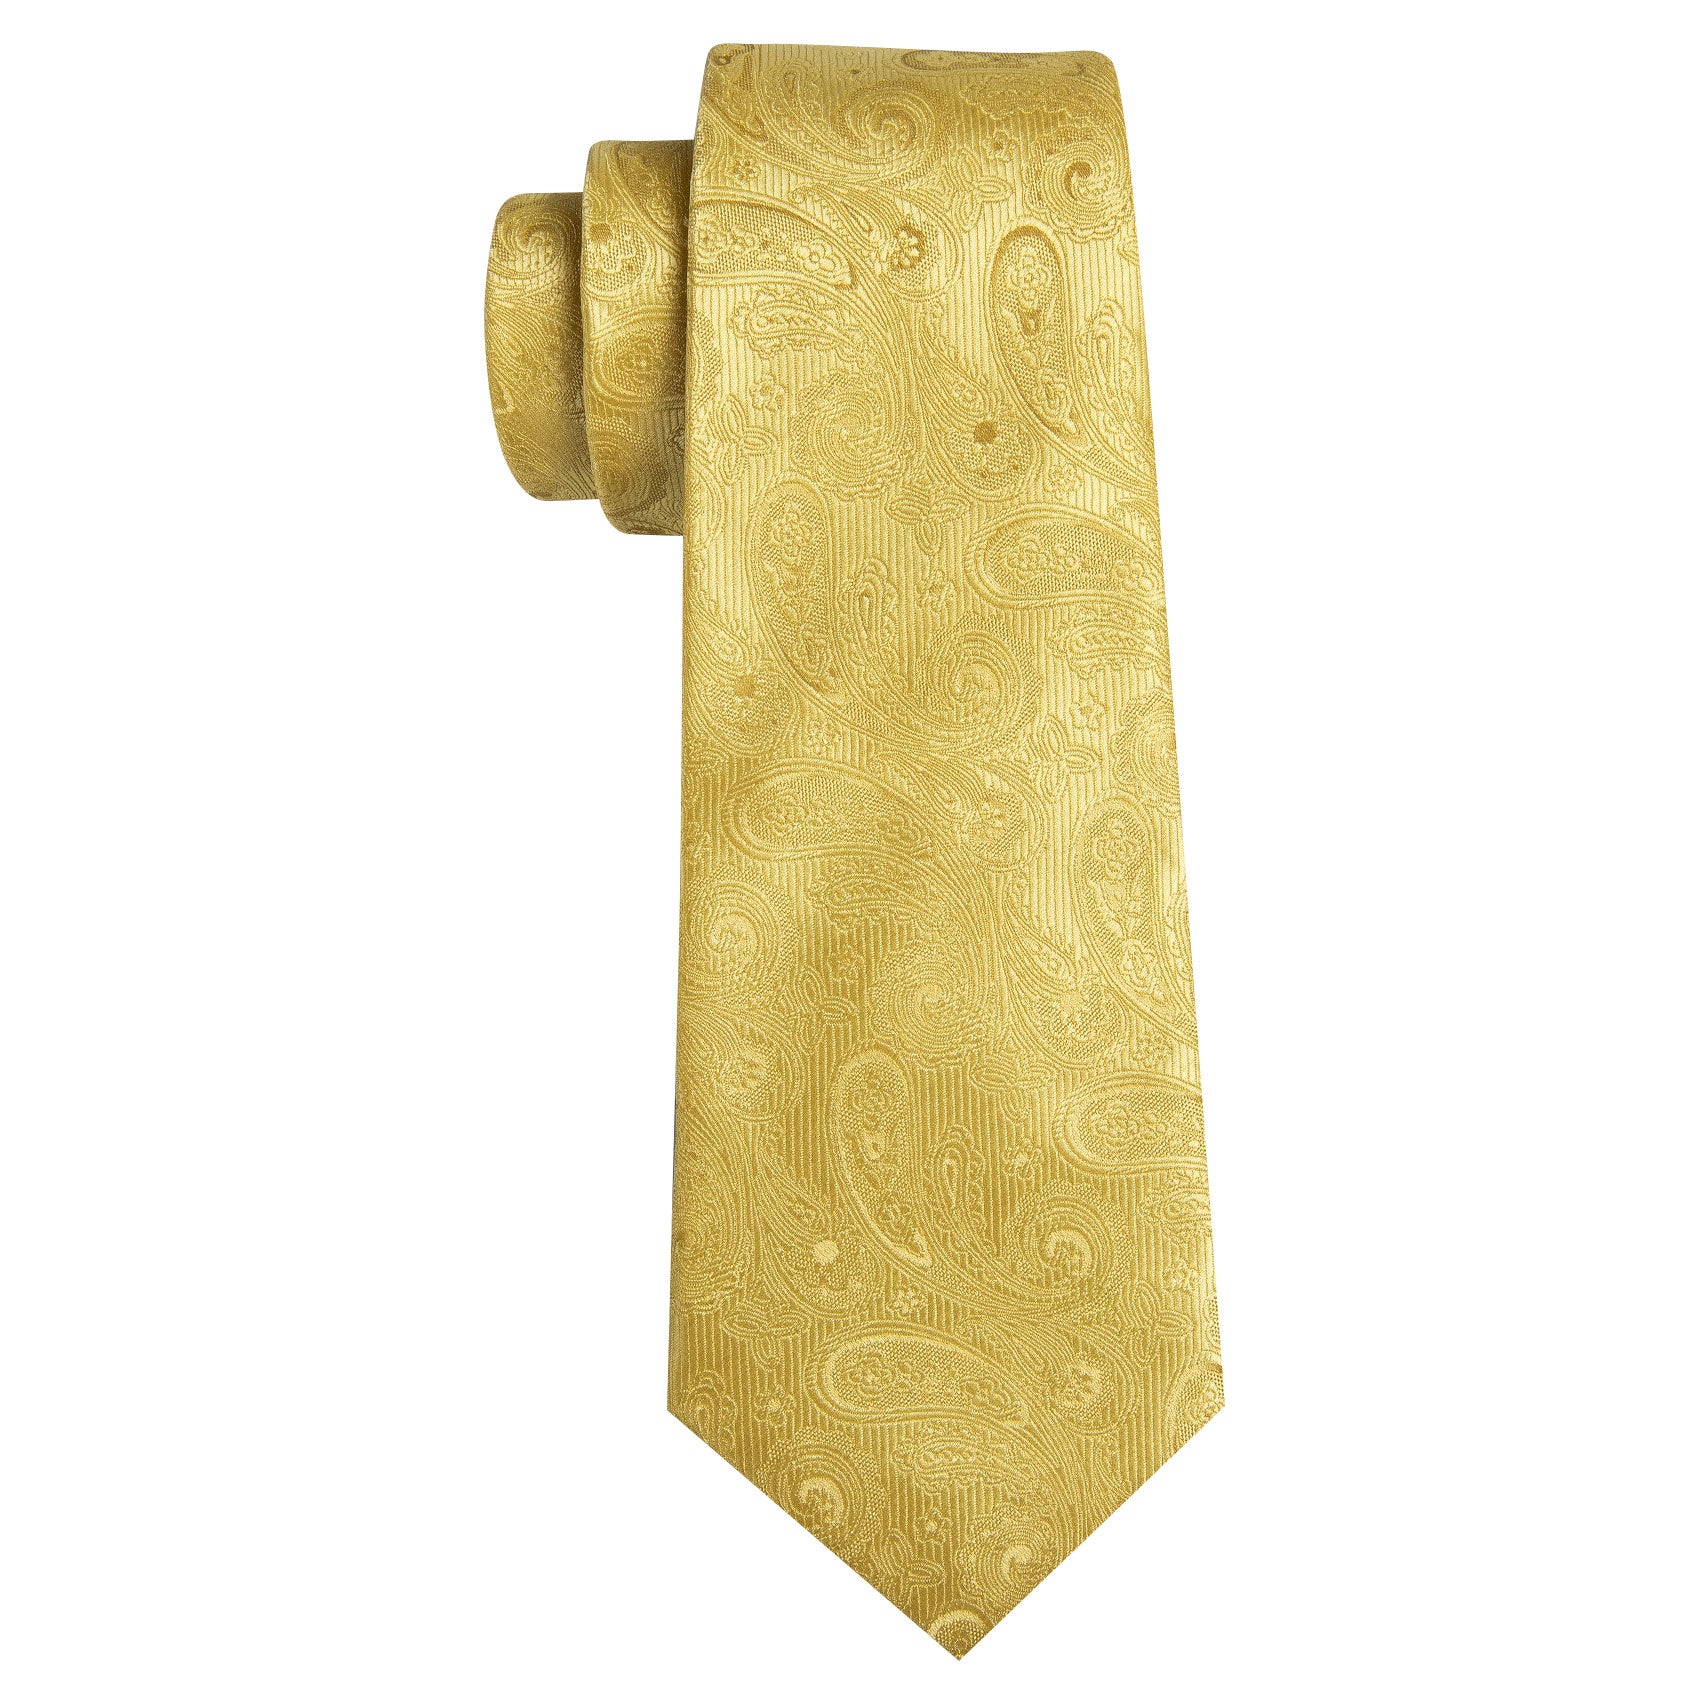 Gold Paisley Silk Tie Handkerchief Cufflinks Set